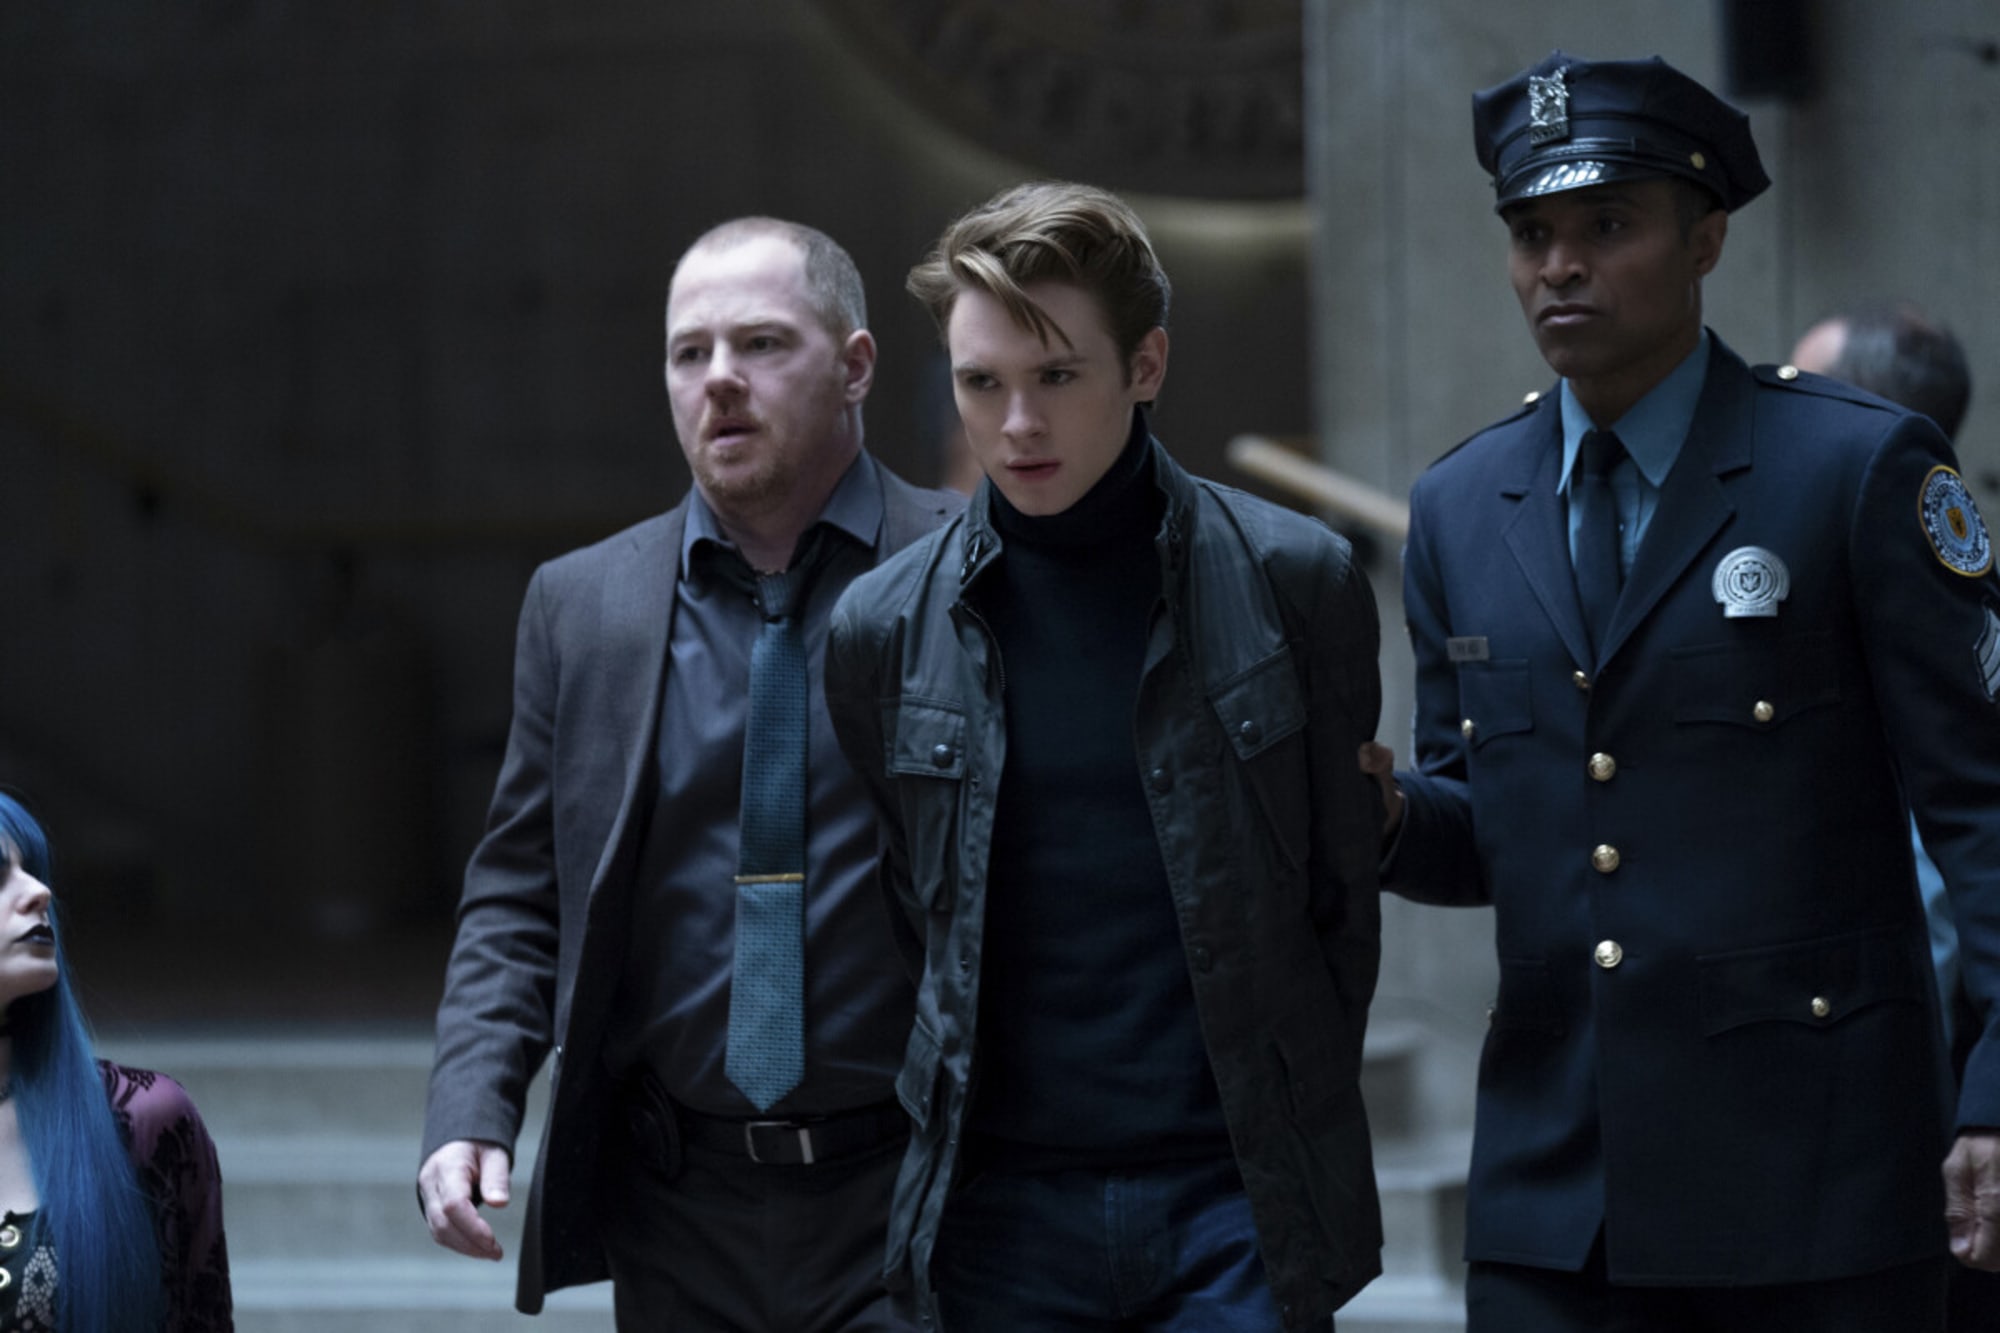 Gotham Knights' Recap: Episode 12 — [Spoiler] Arrested for Murder